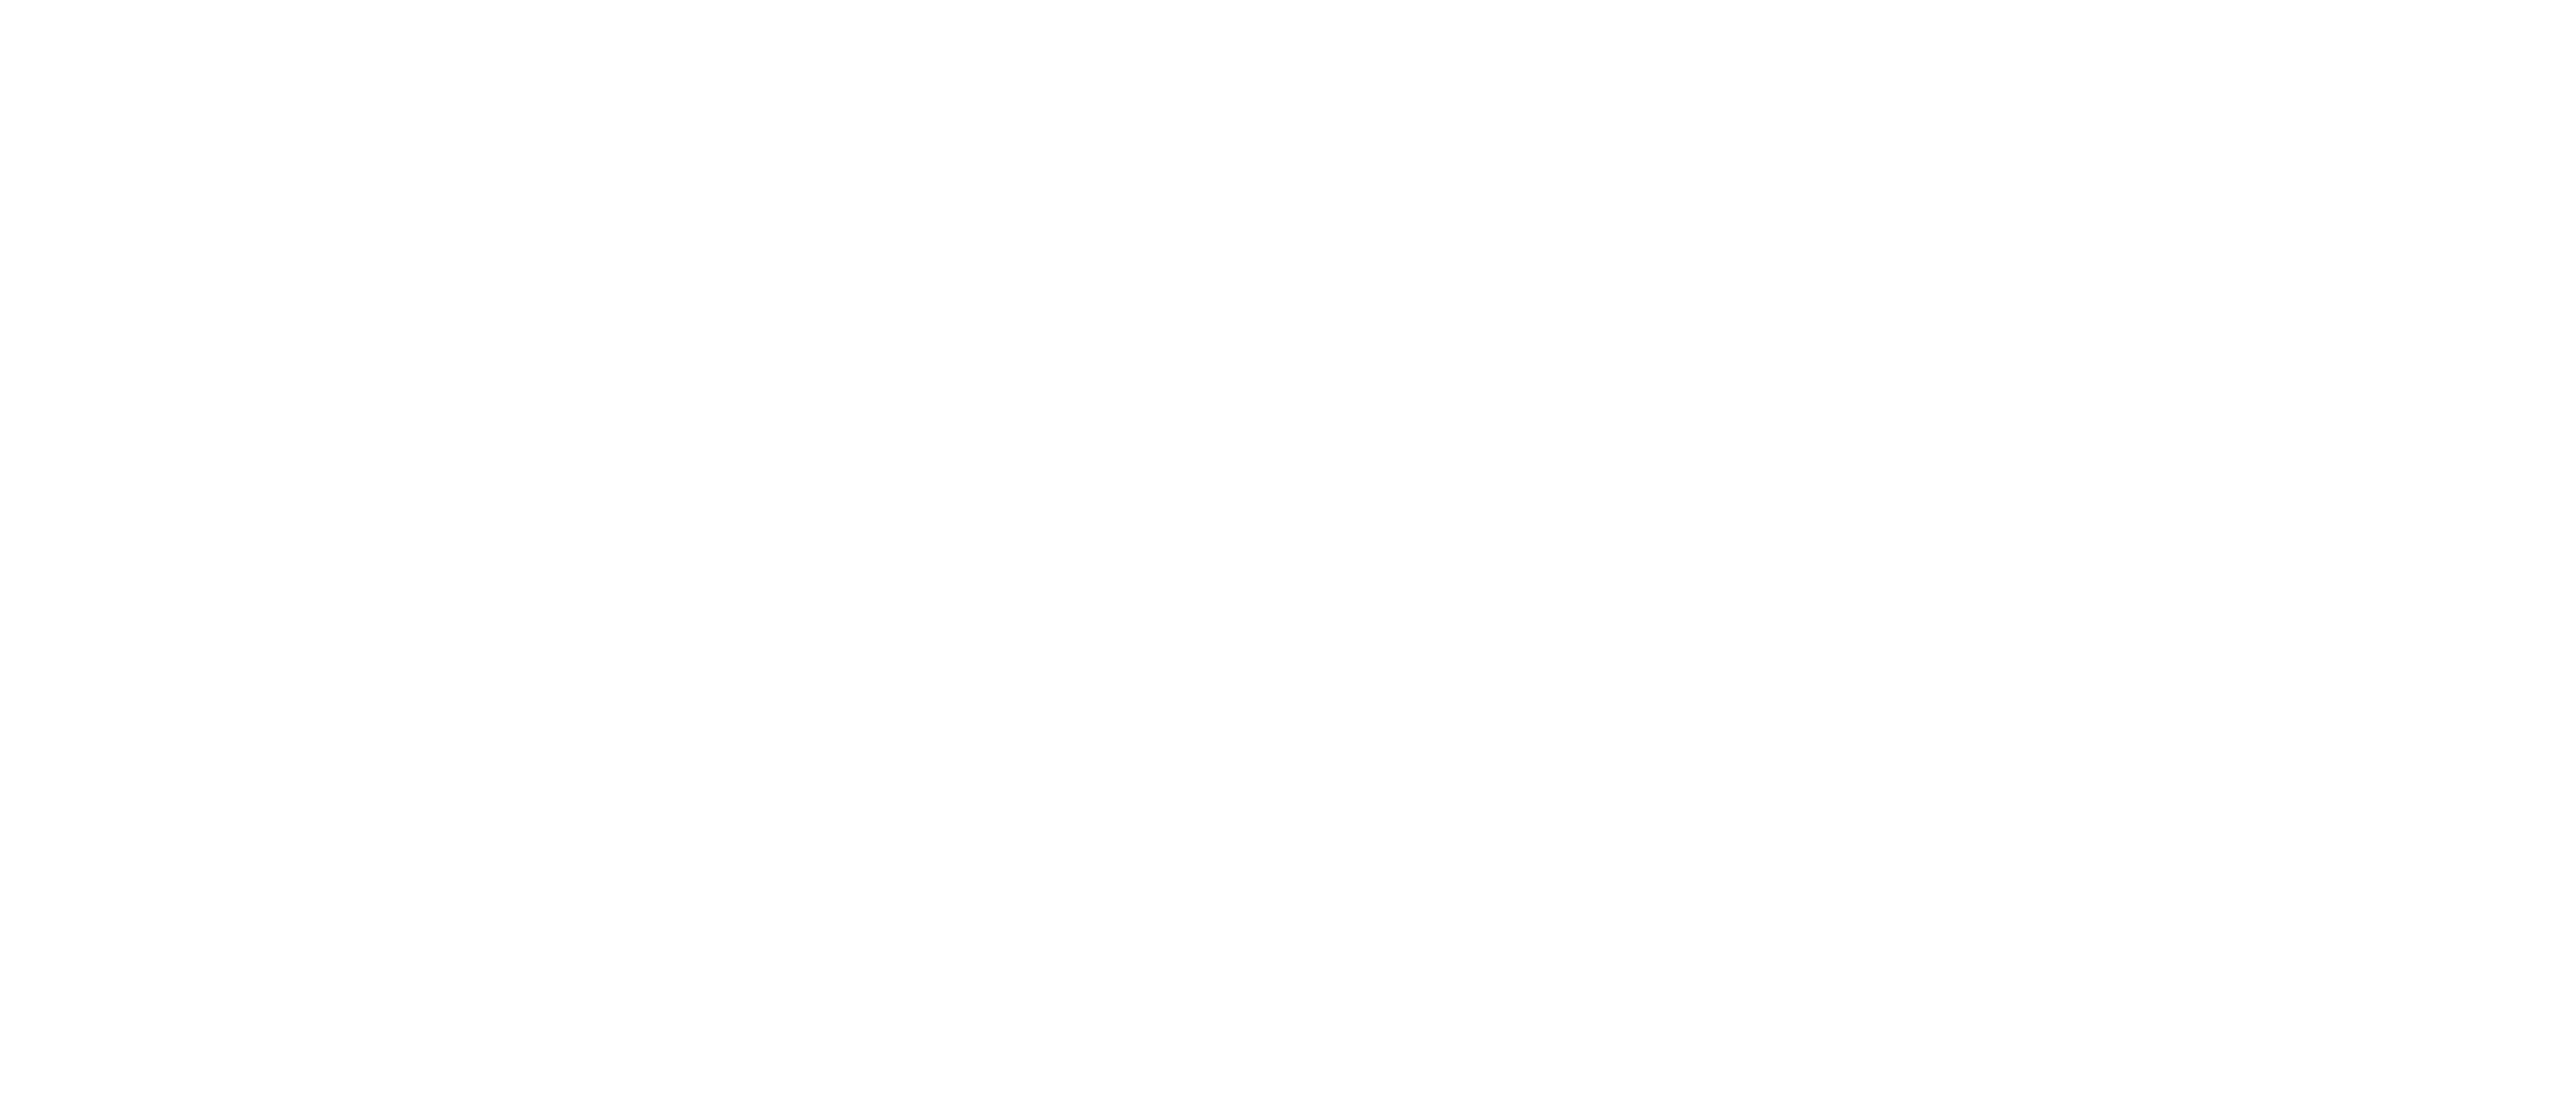 Chasing rainbows logo